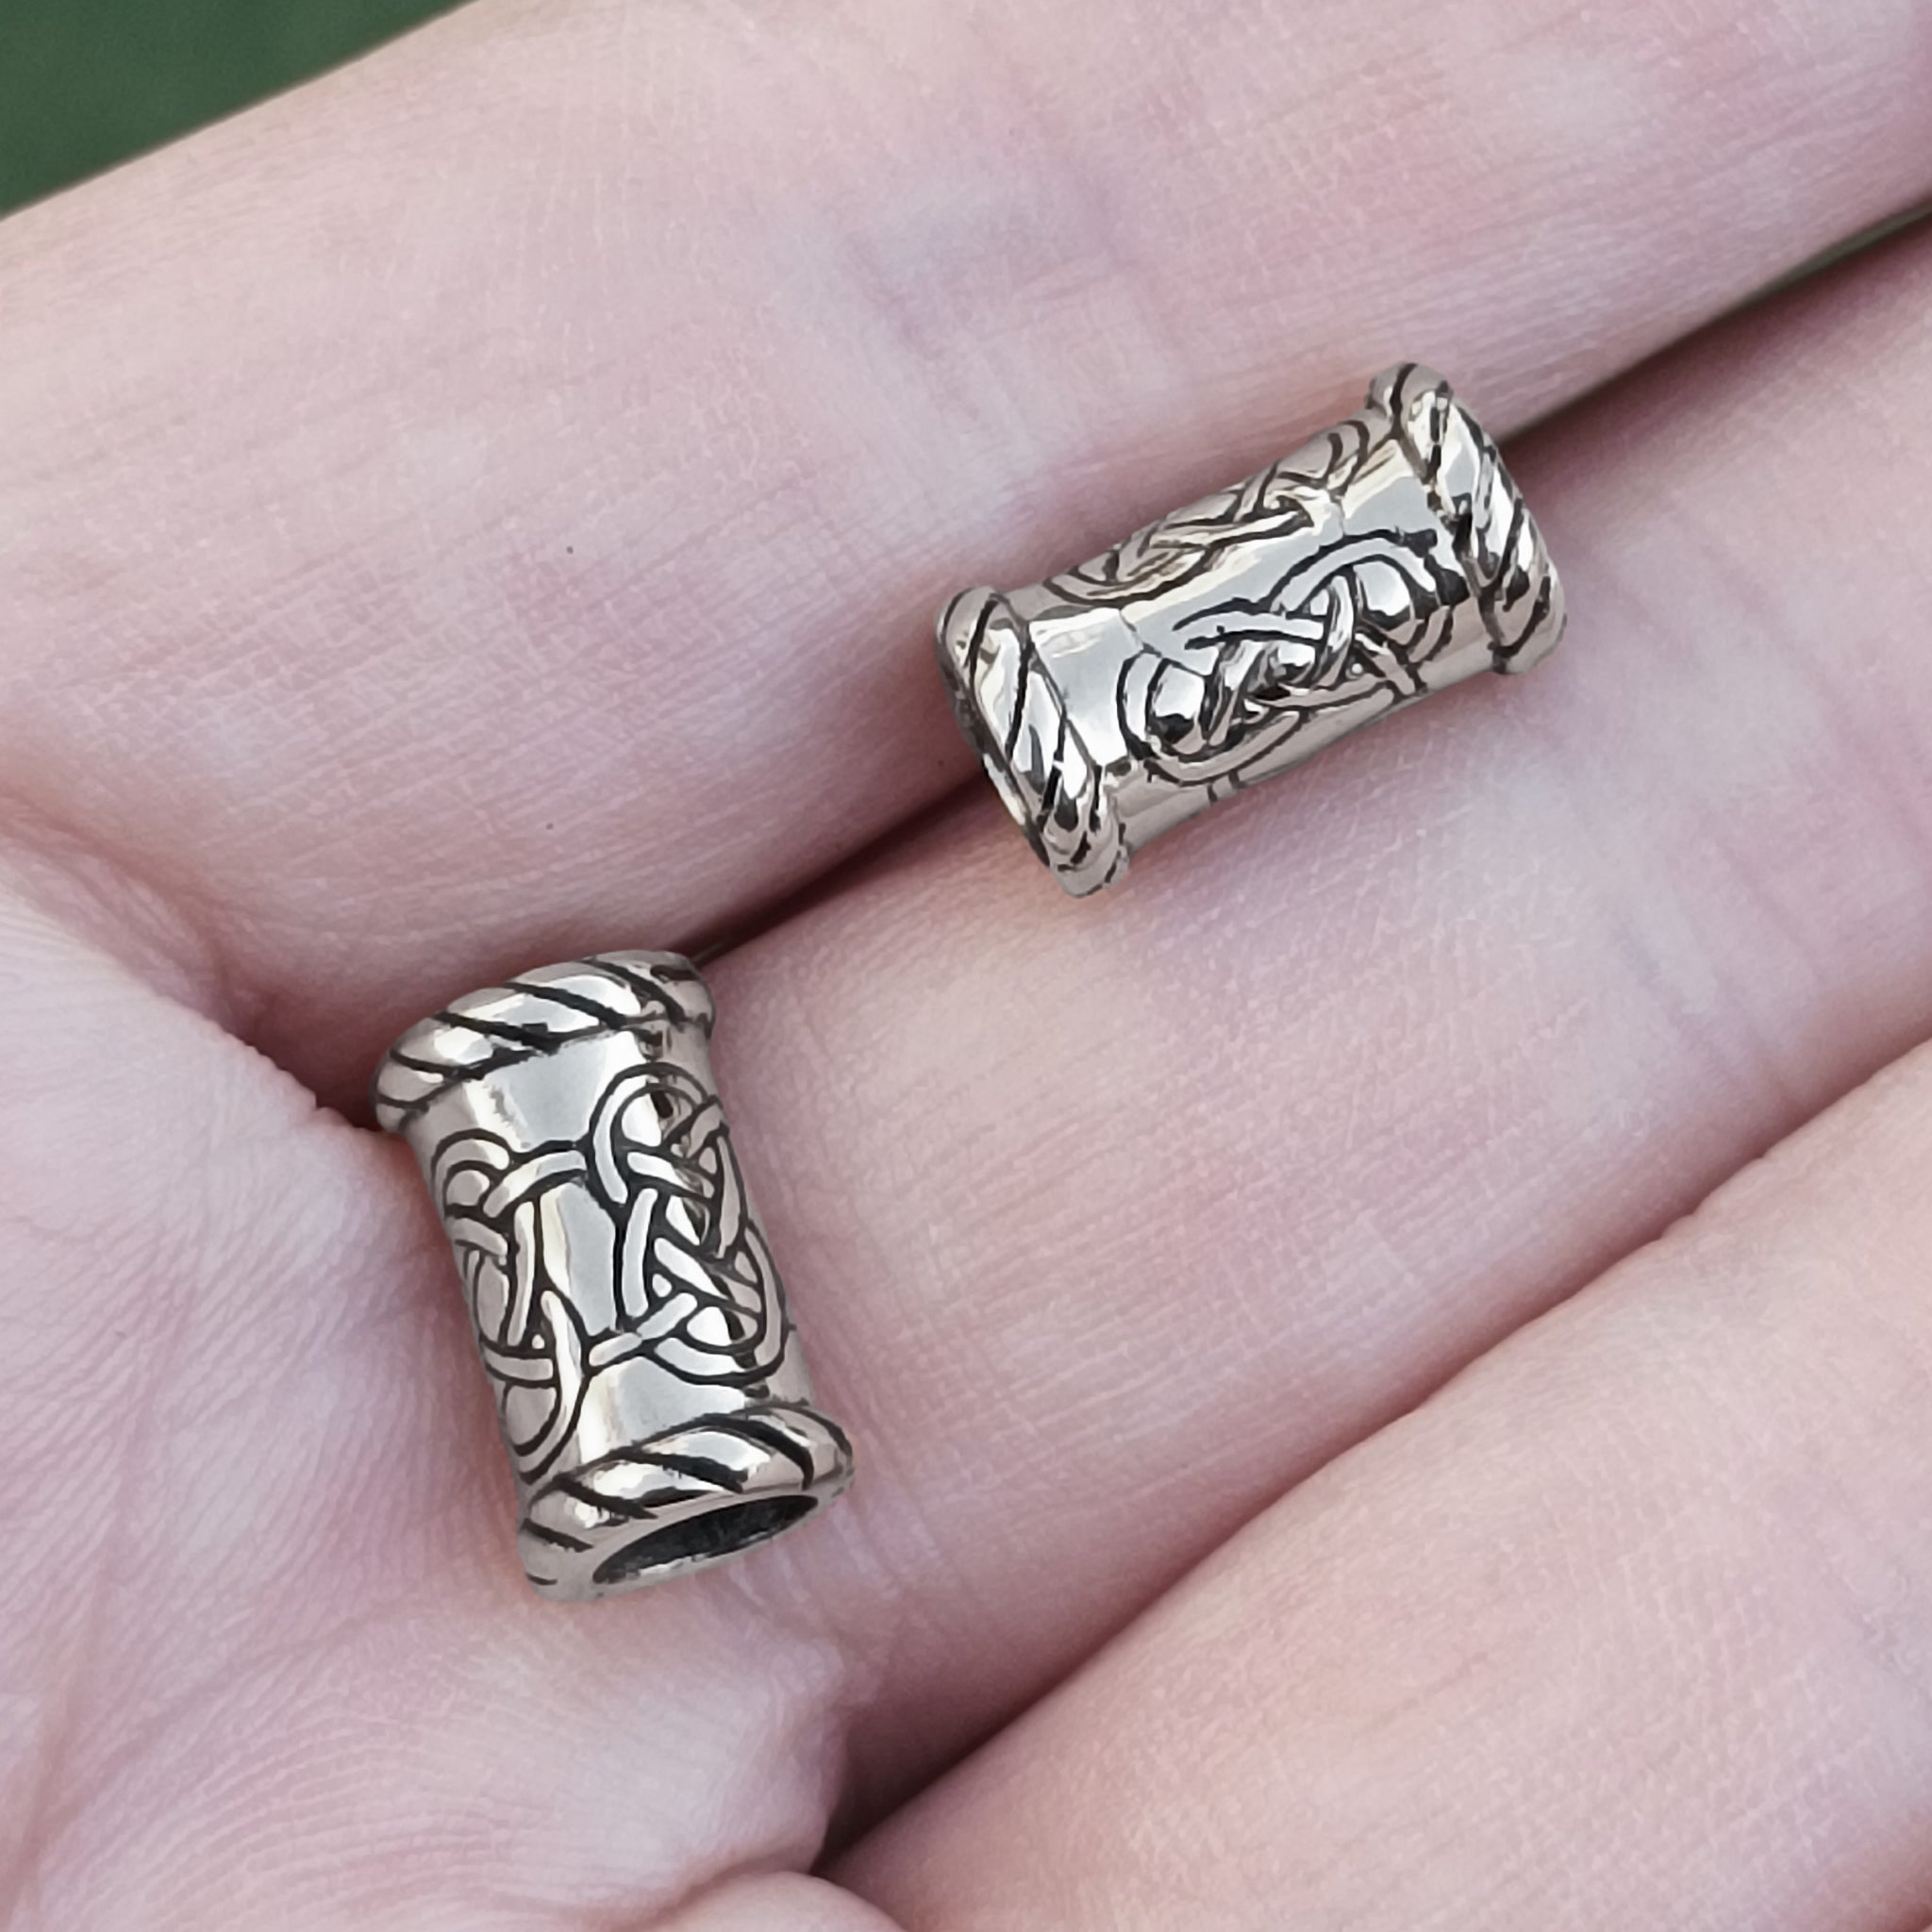 Small Knotwork Viking Beard Rings on Hand - Silver